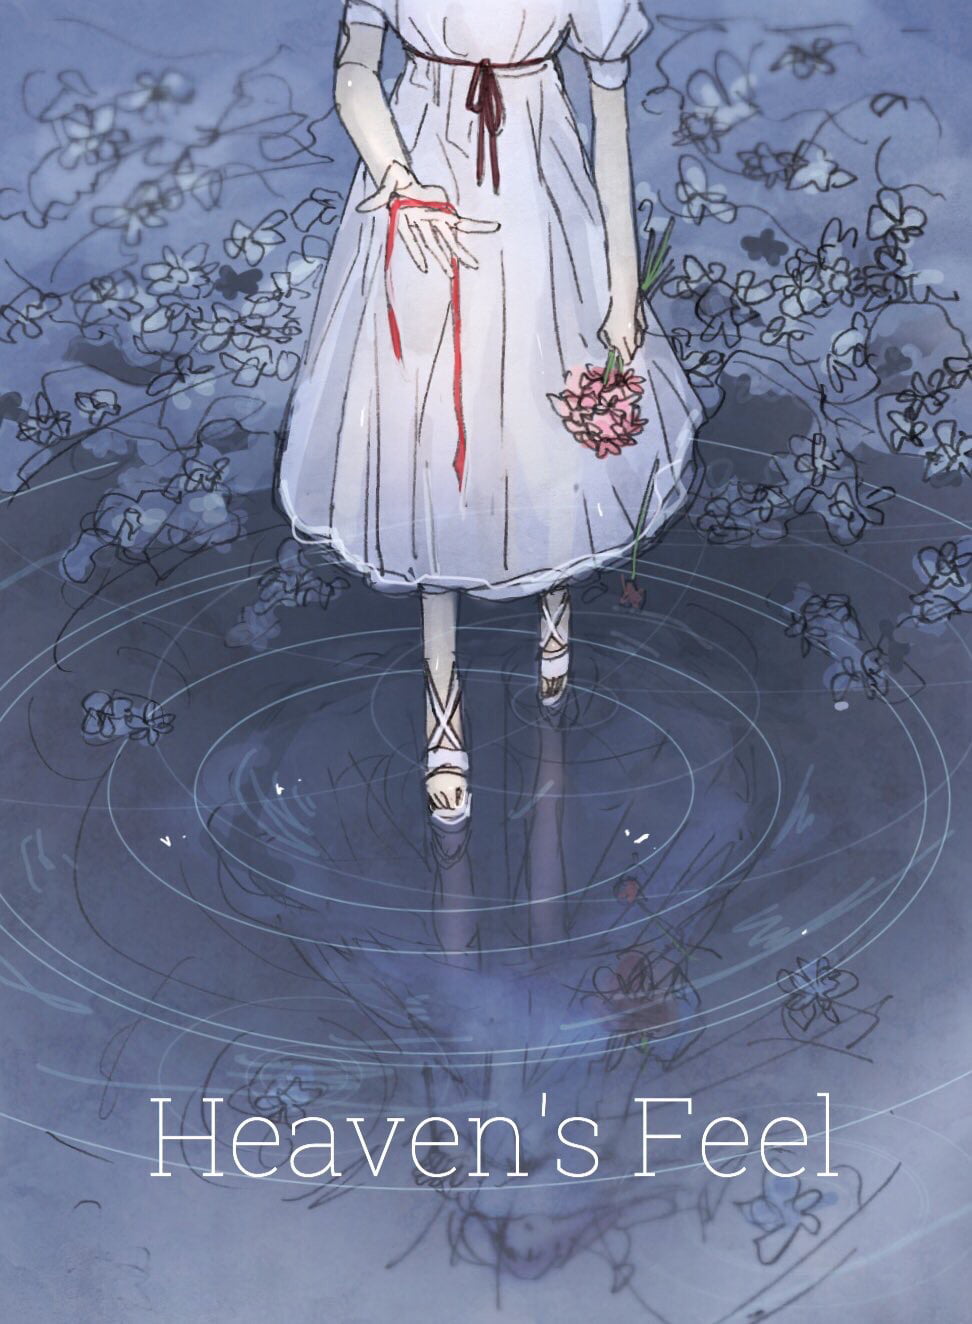 Fate Series, Fate/Stay Night, fate/stay night: heaven's feel